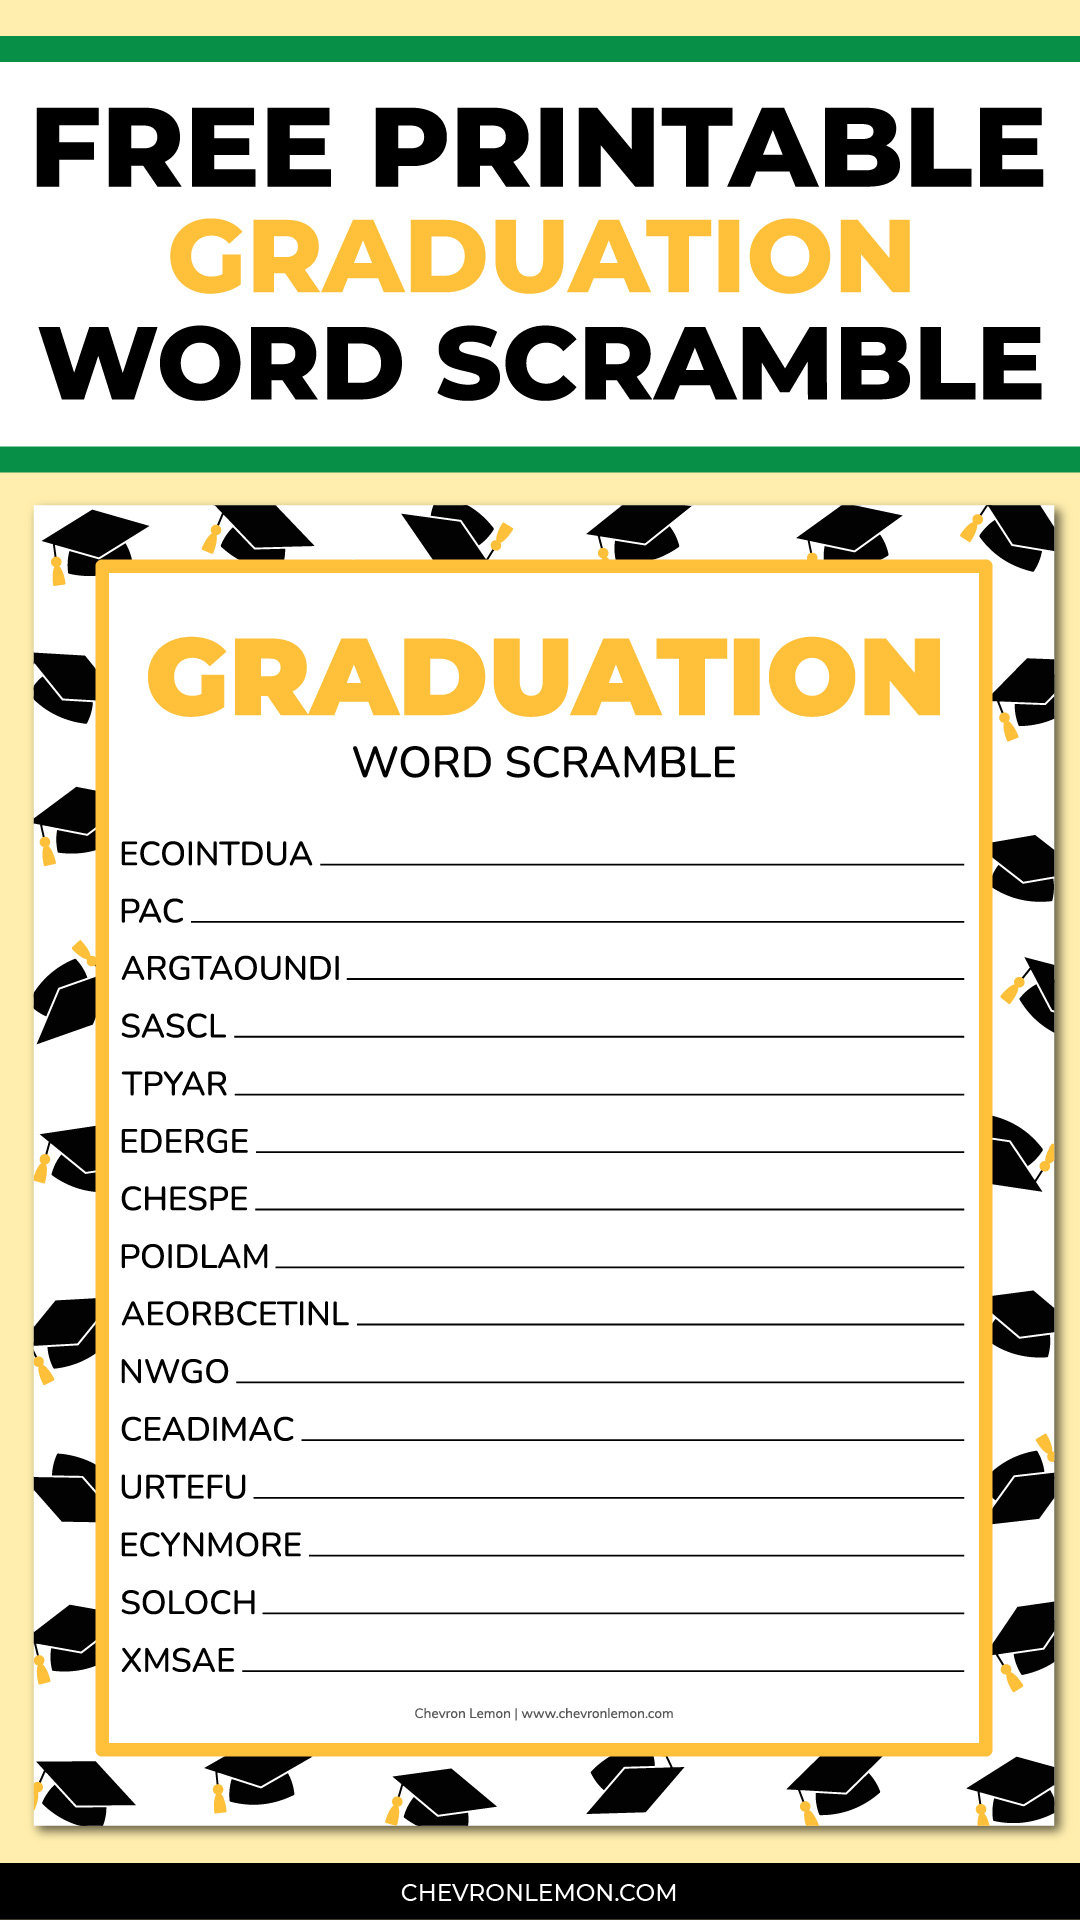 Printable graduation word scramble